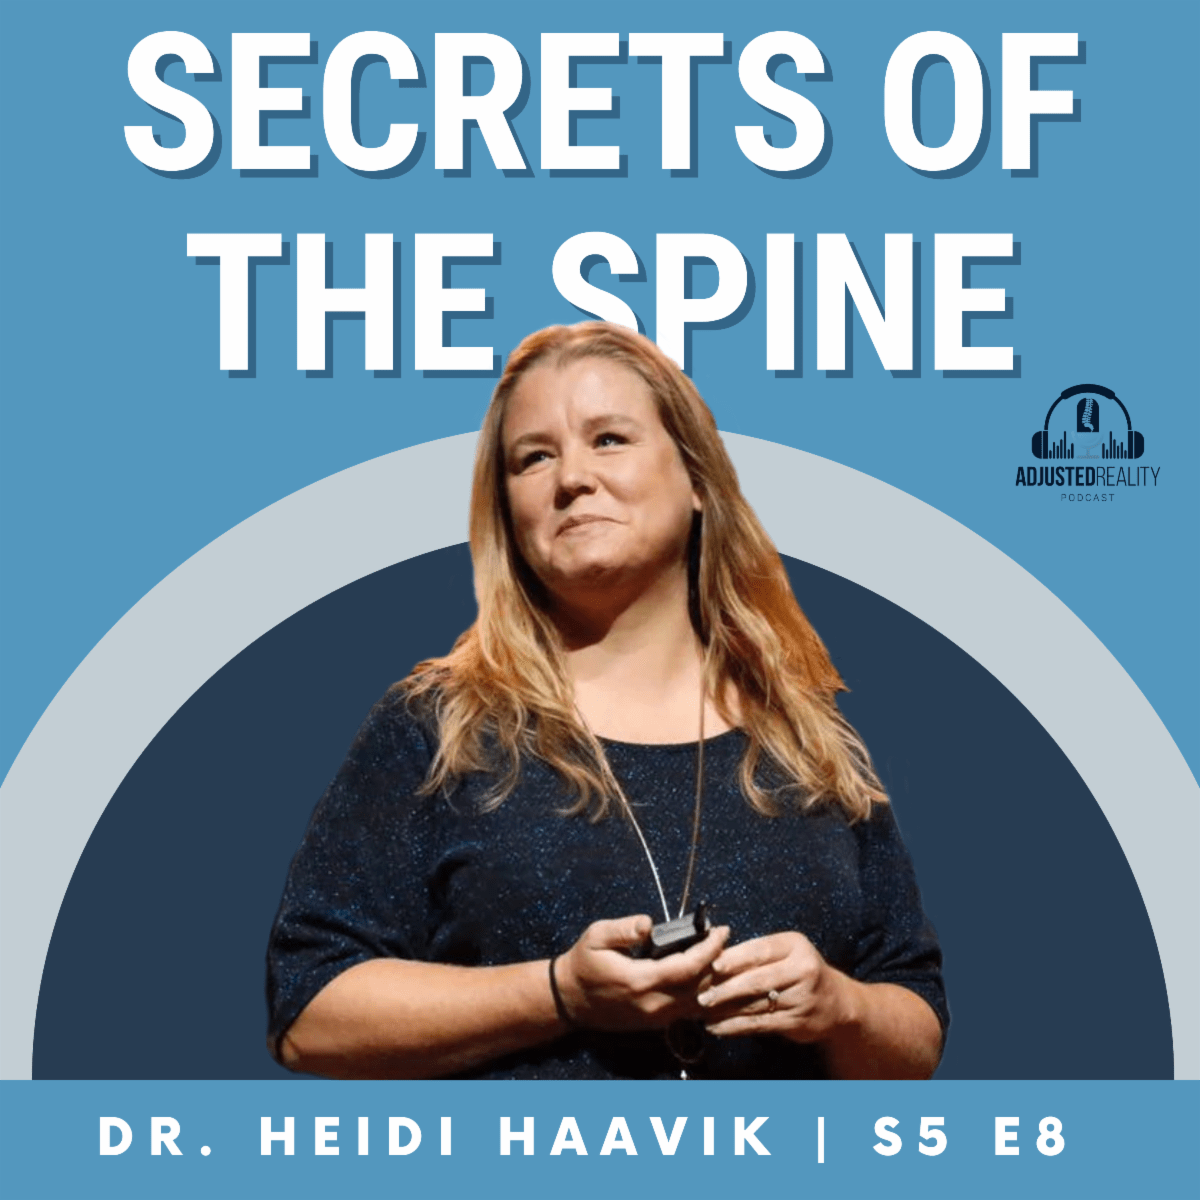 Heidi Haavik Secrets of the Spine podcast